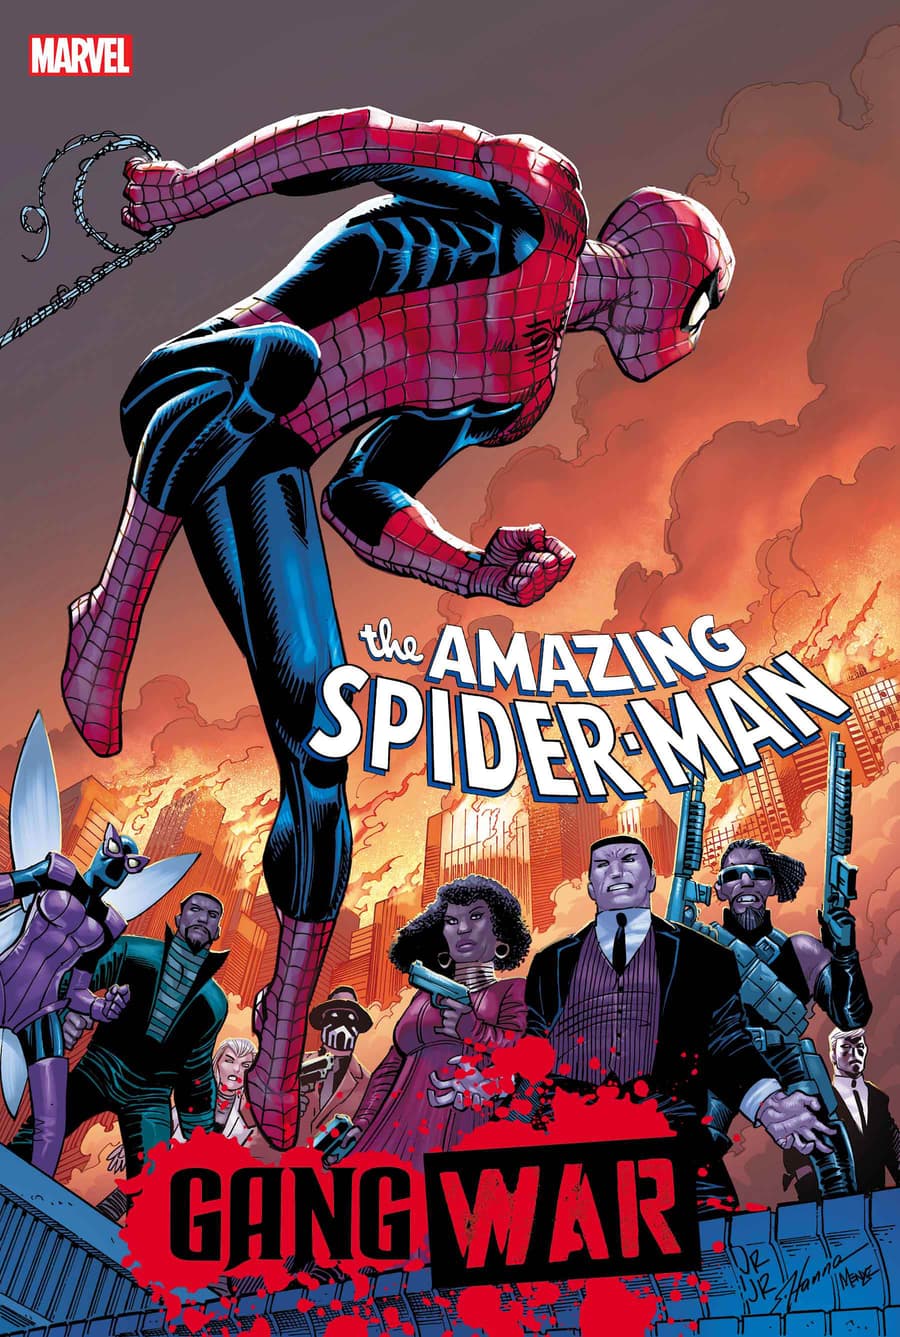 Cover to AMAZING SPIDER-MAN GANG WAR: FIRST STRIKE #1 by John Romita Jr. 